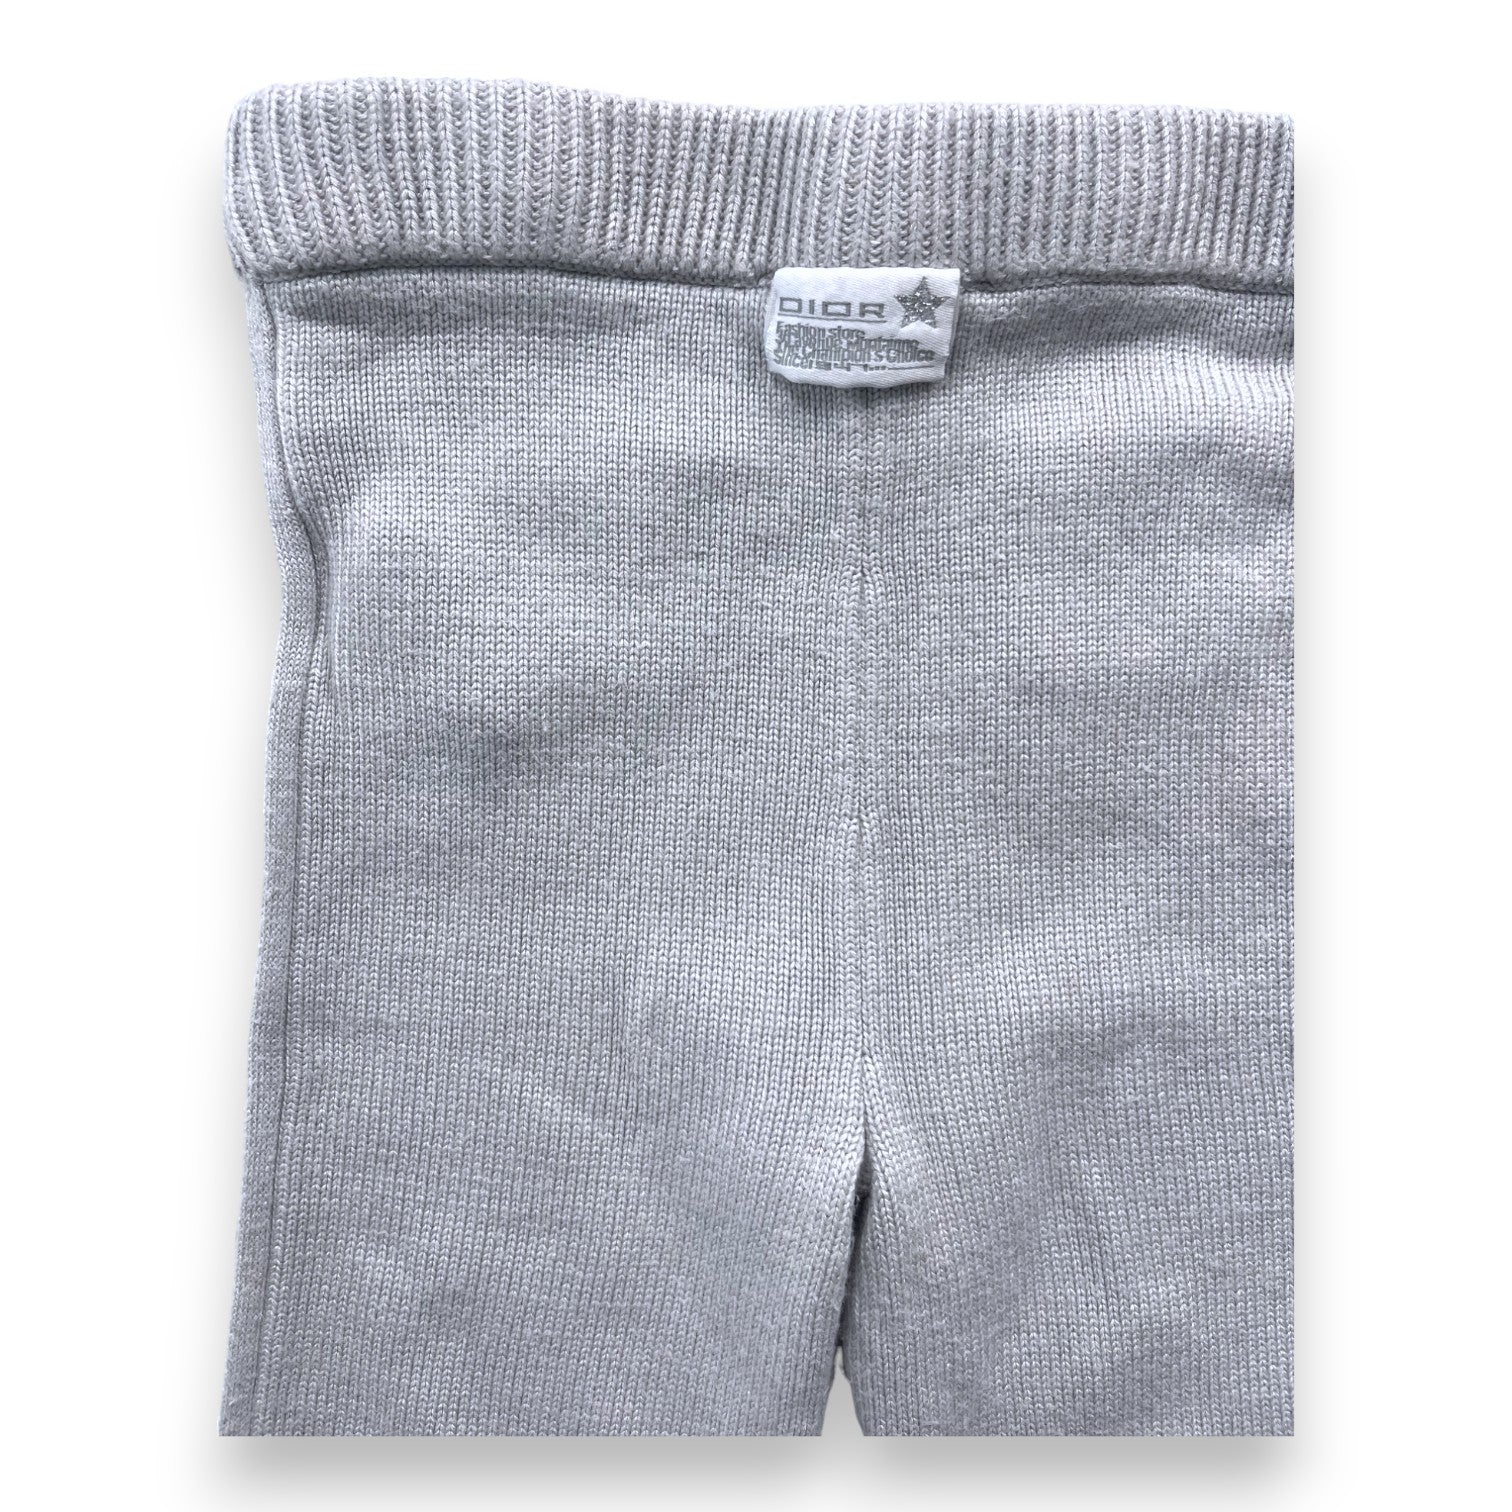 BABY DIOR - Ensemble gilet et pantalon gris liserés blancs - 9 mois